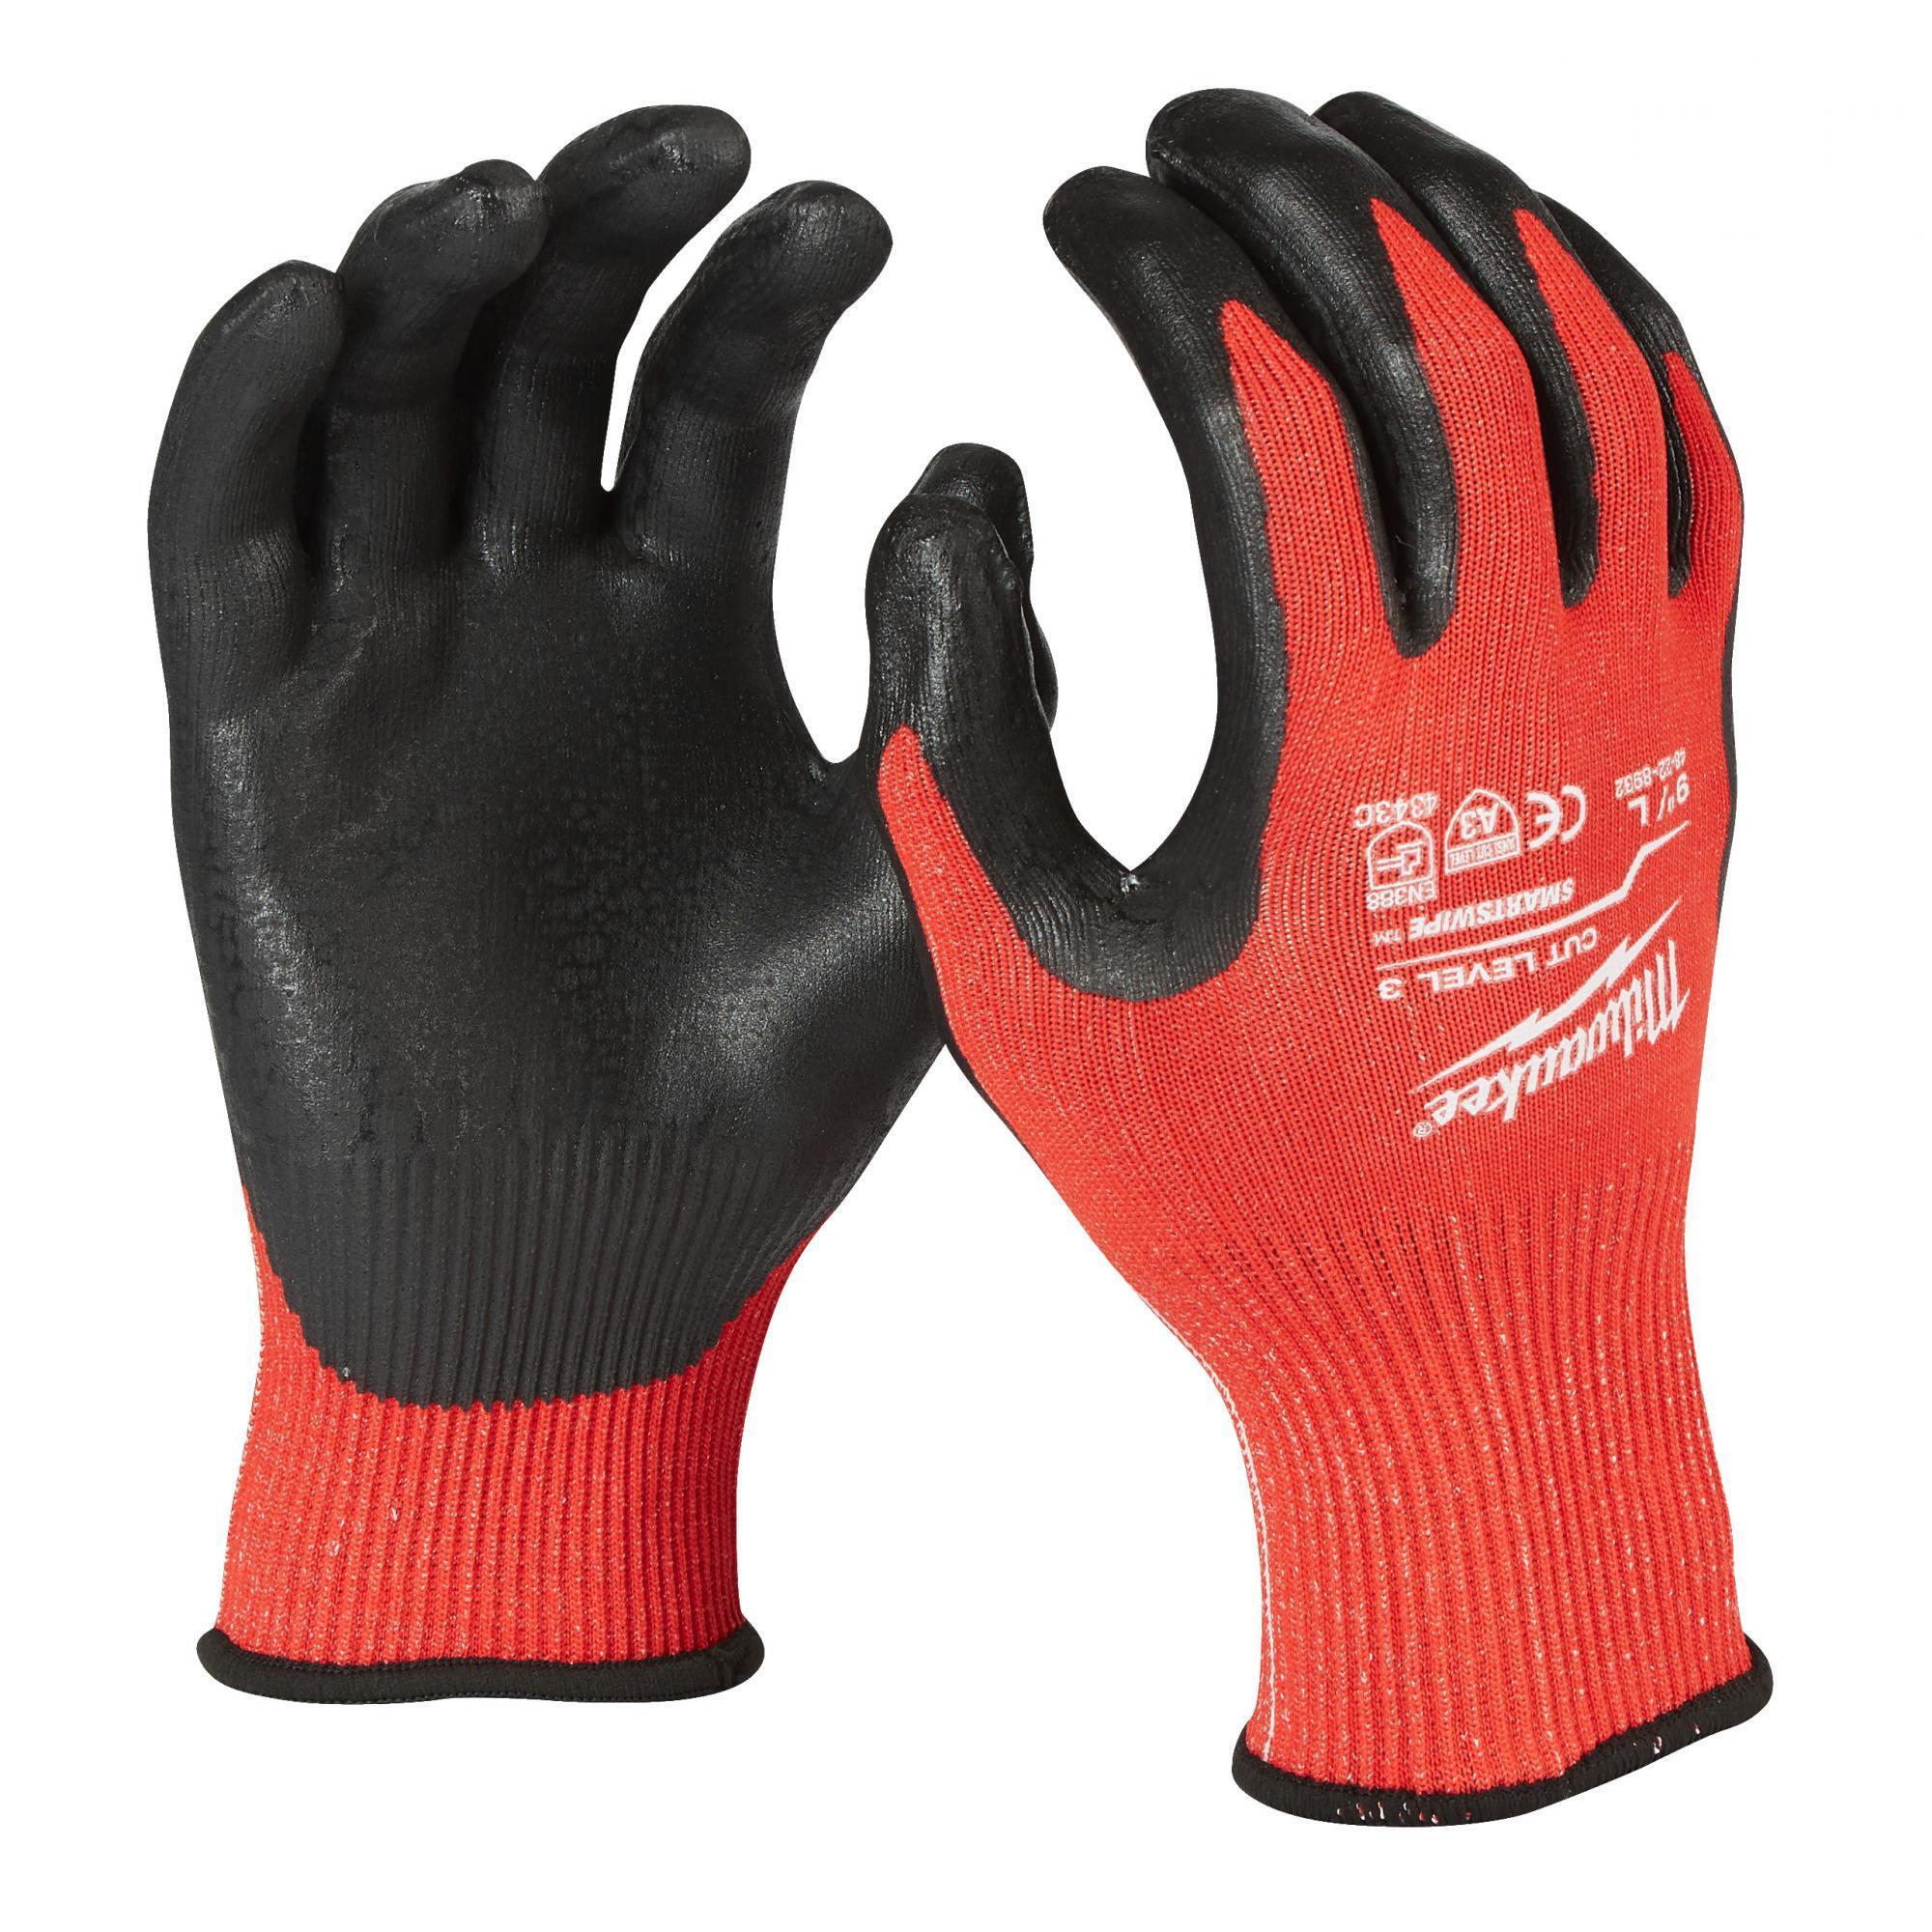 Перчатки защитные Milwaukee Cut Level 3/C, размер L/9, 4932471619, 1 пара перчатки хб с пвх мастер чёрные дс 36 пара